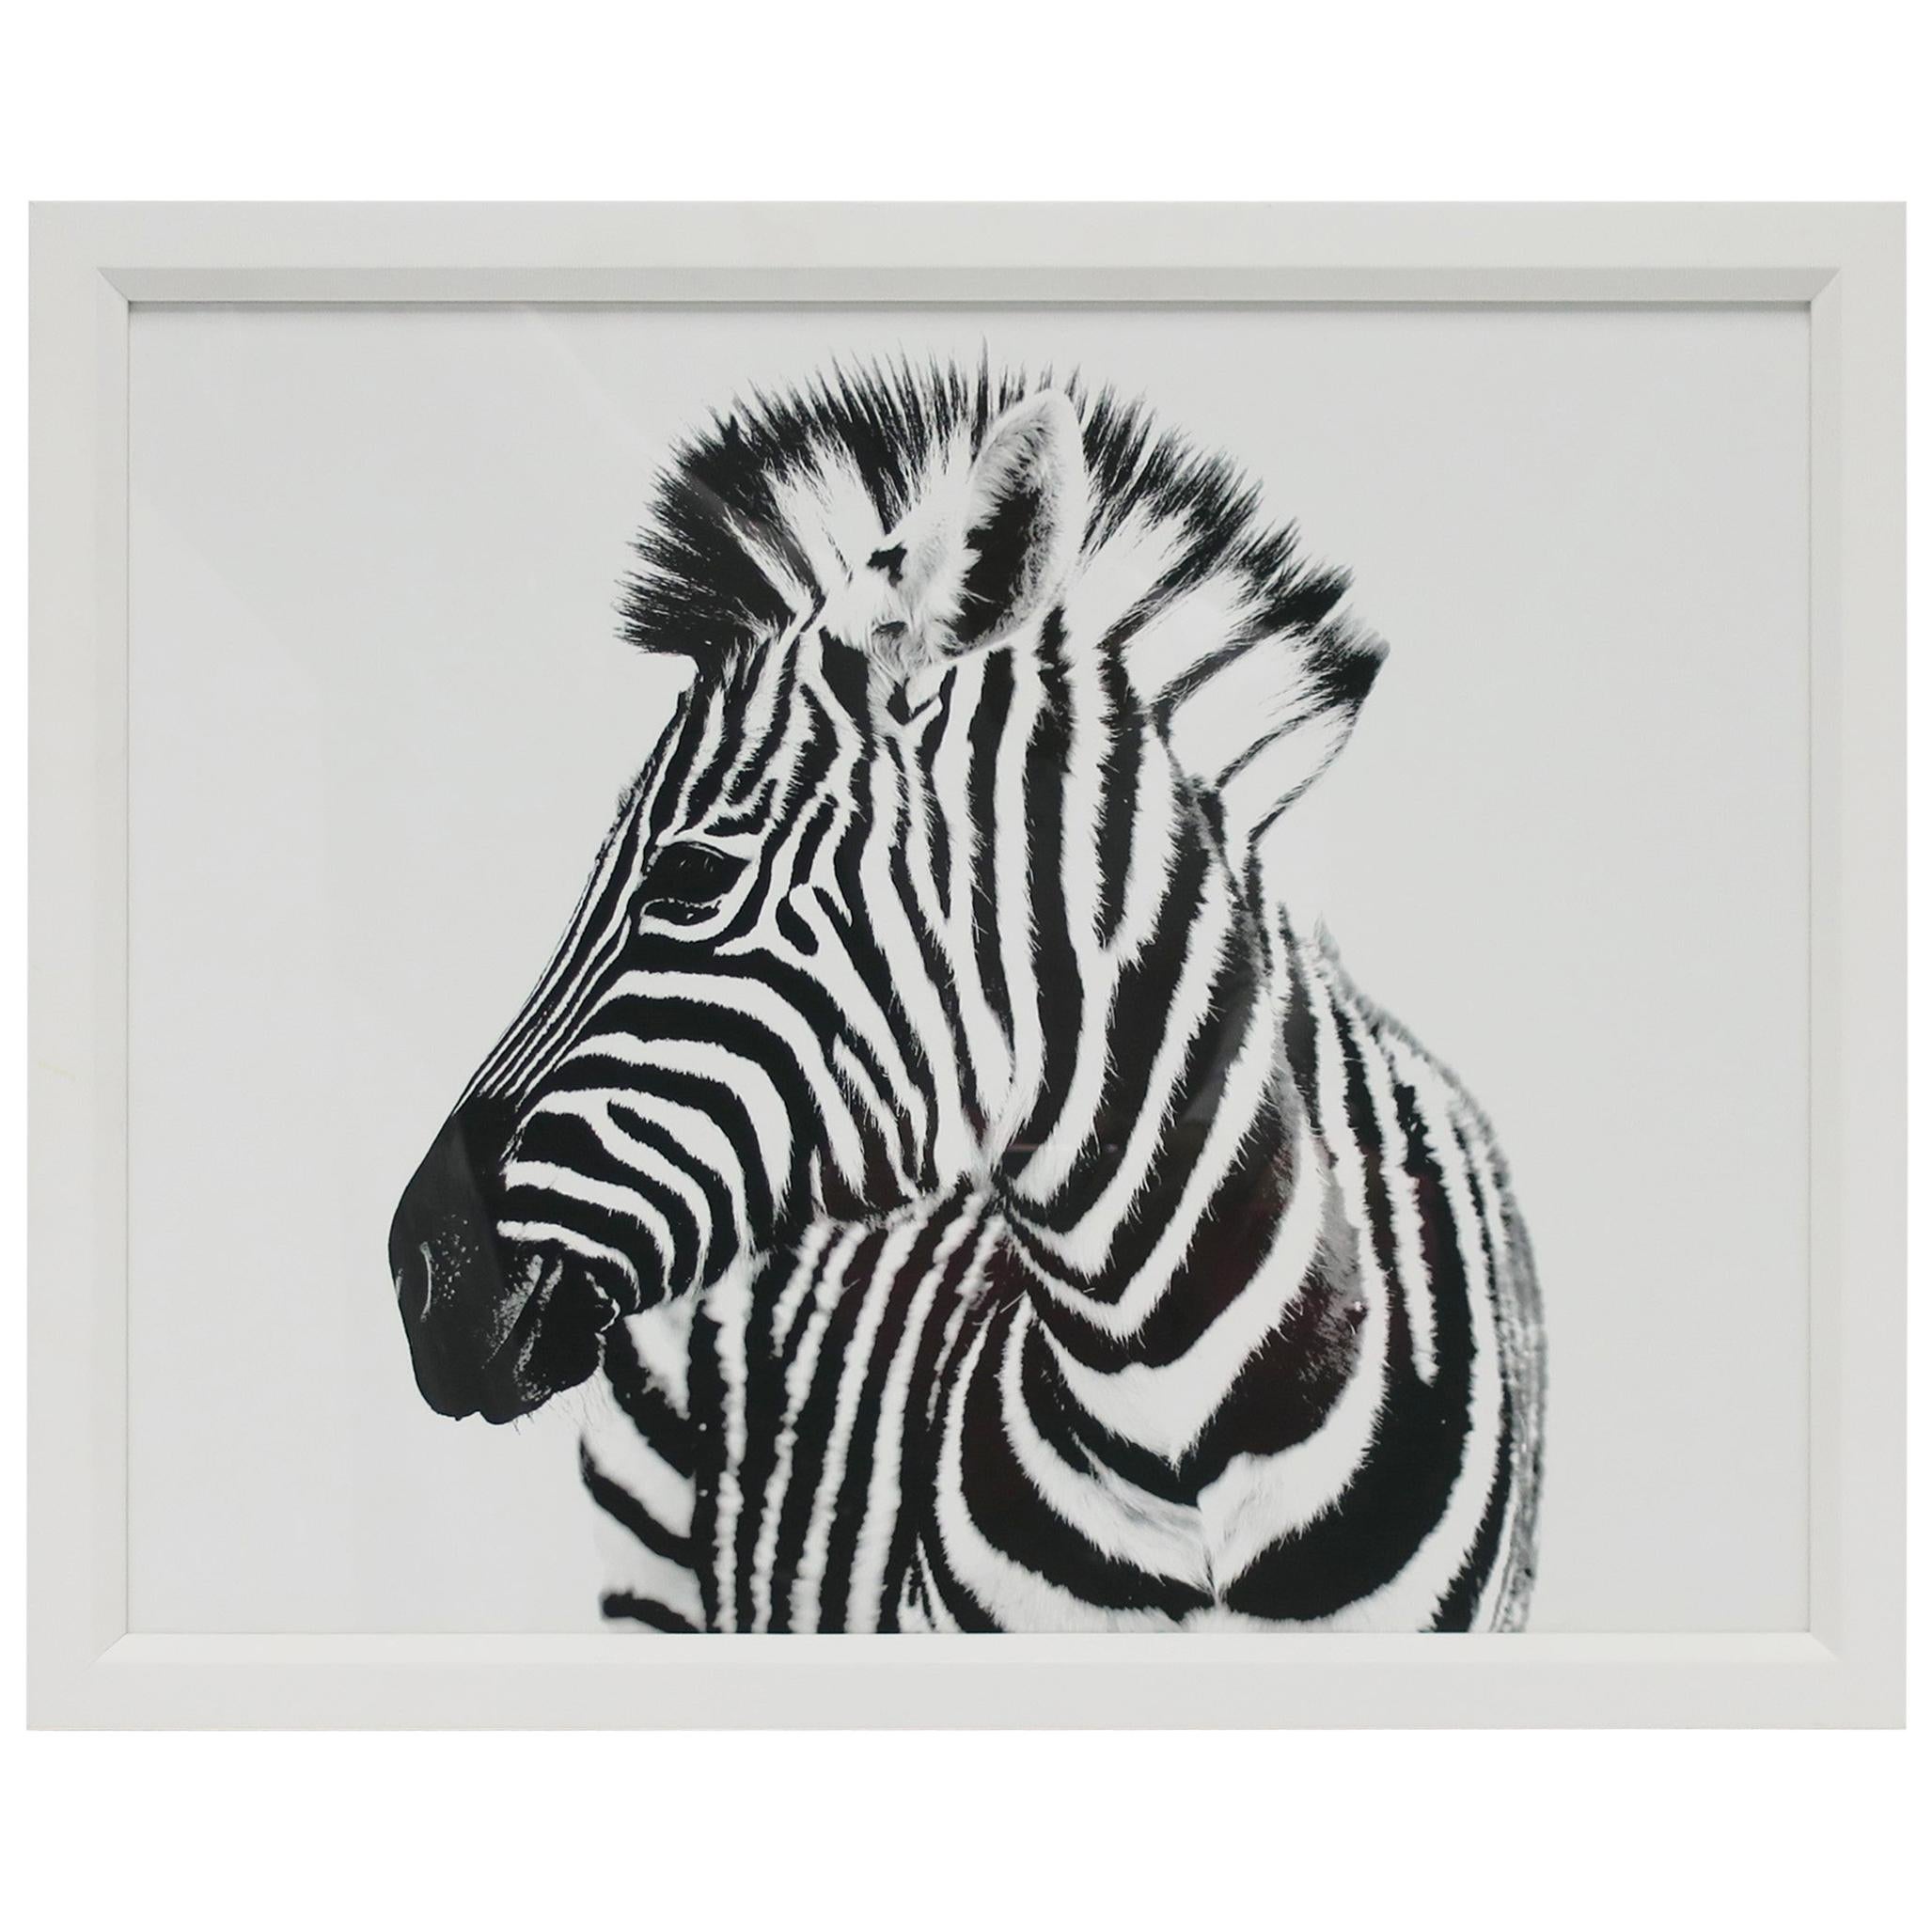 English Black and White Zebra Animal Photo Print with White Frame